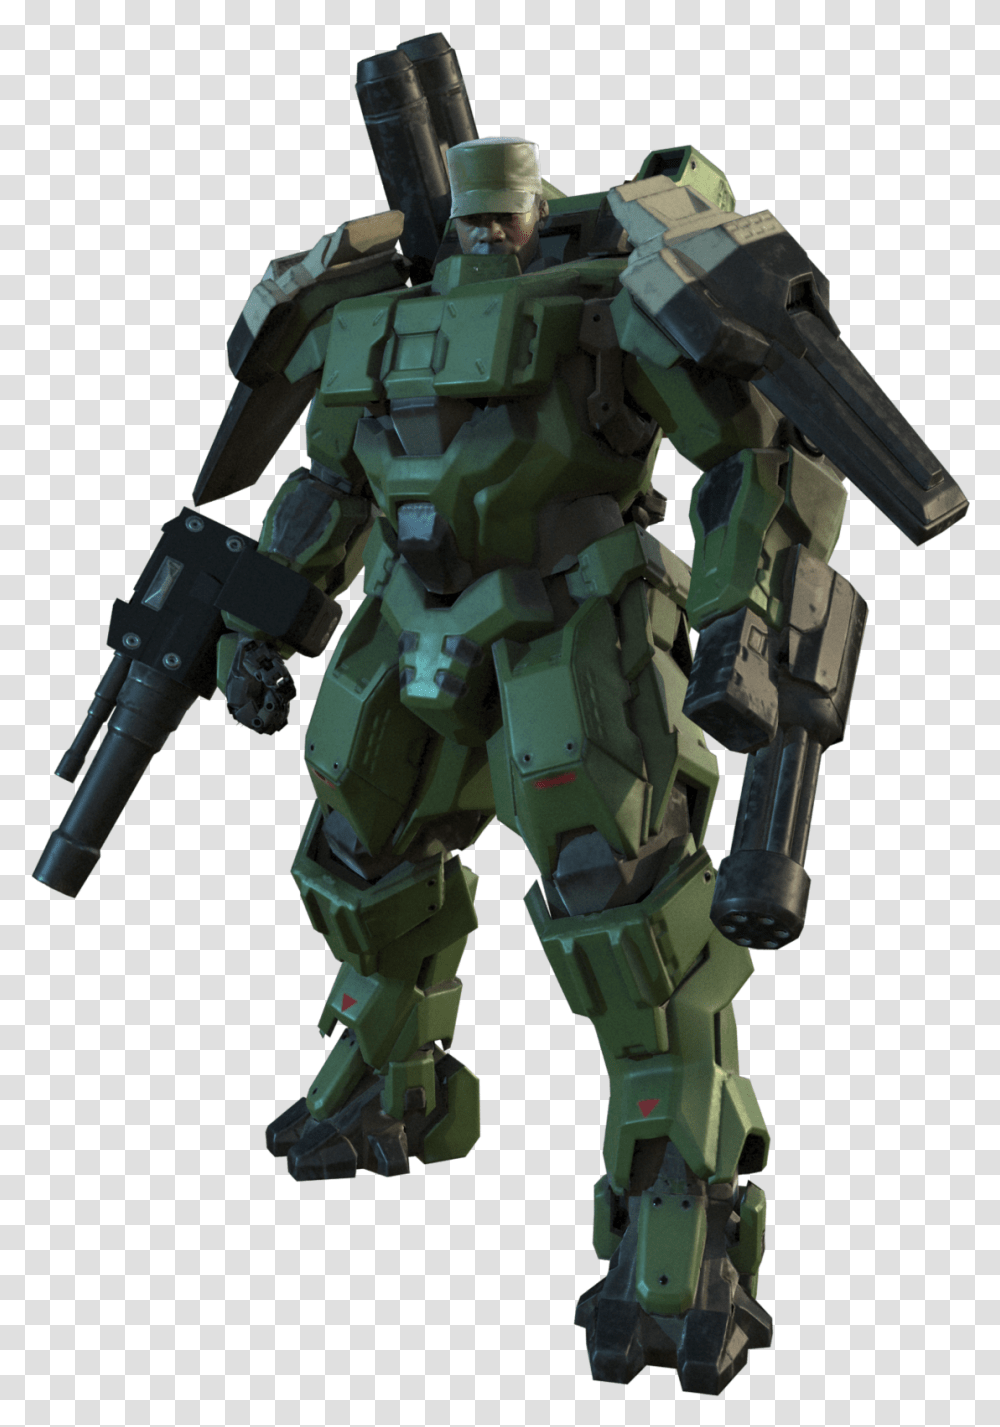 Halo Wars 2 Sergeant Johnson, Toy, Robot, Armor Transparent Png